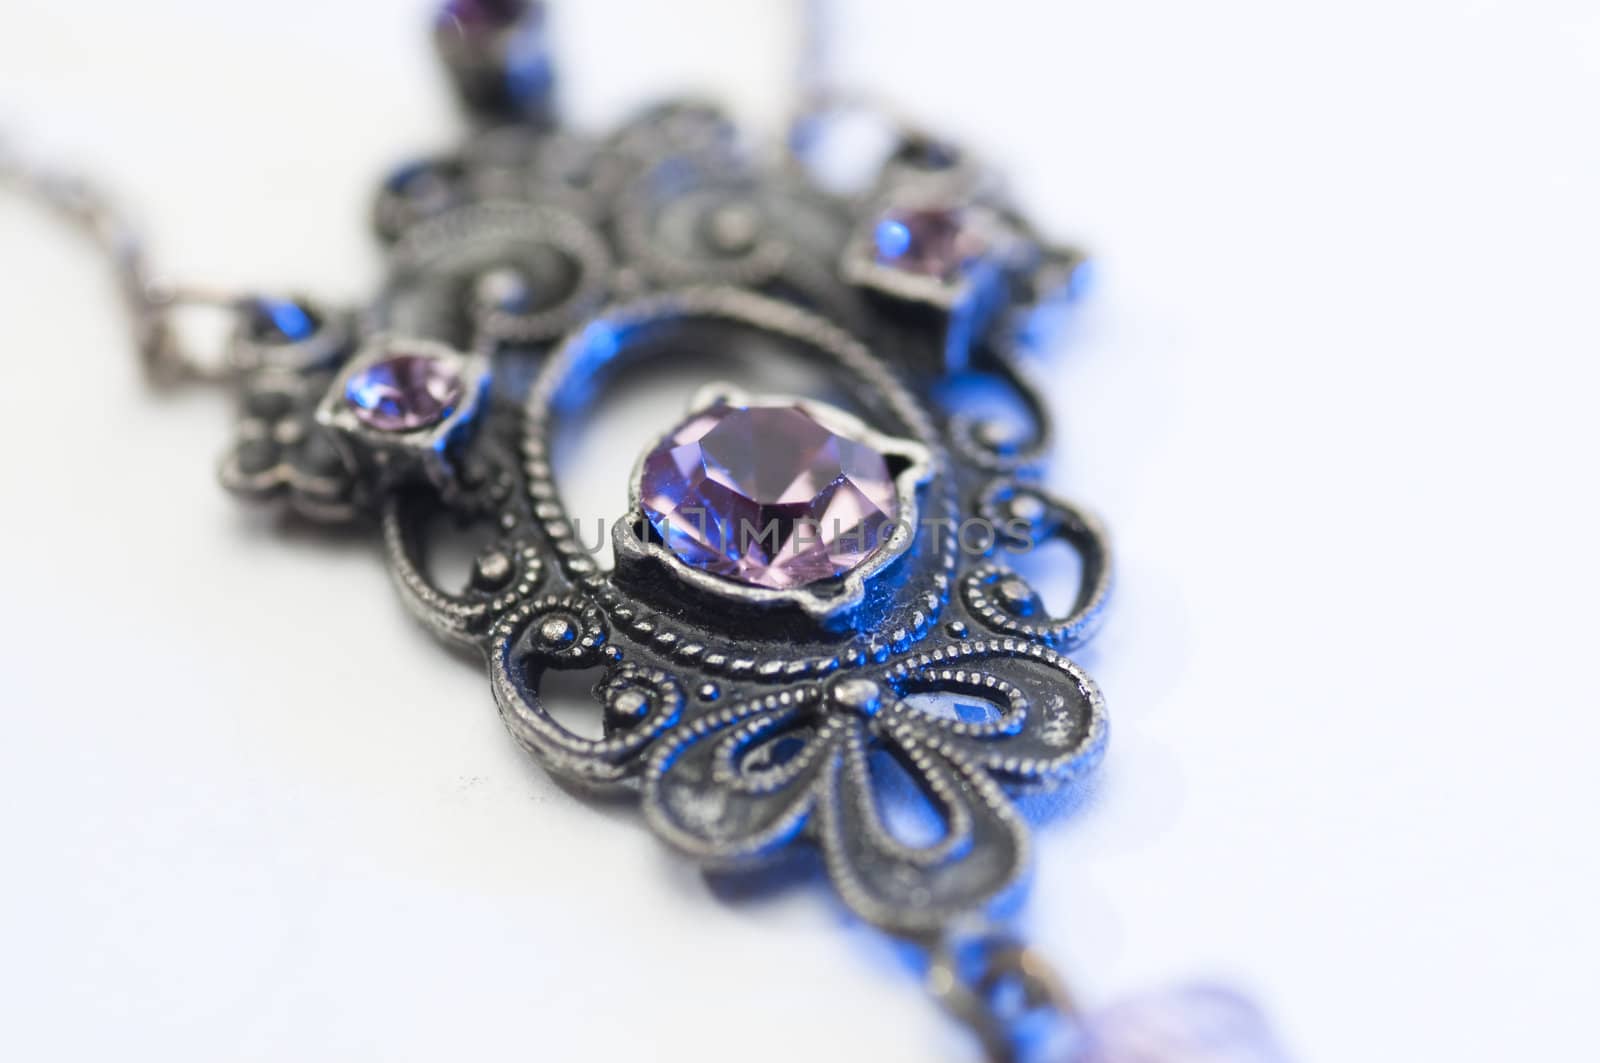 Jewels by FernandoCortes